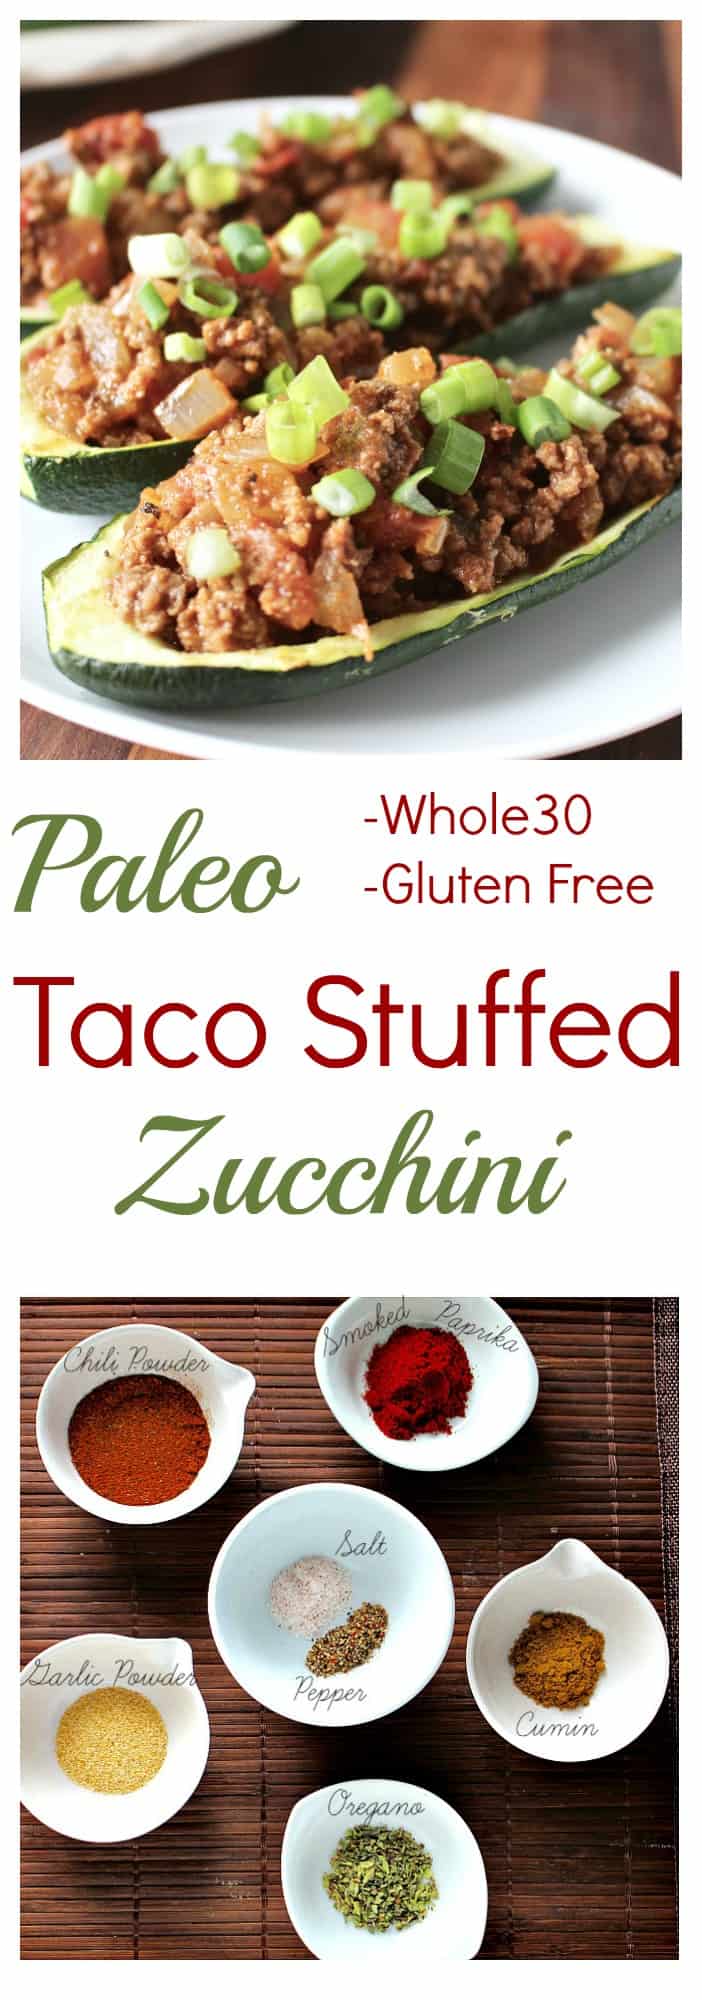 Paleo Taco Stuffed Zucchini 